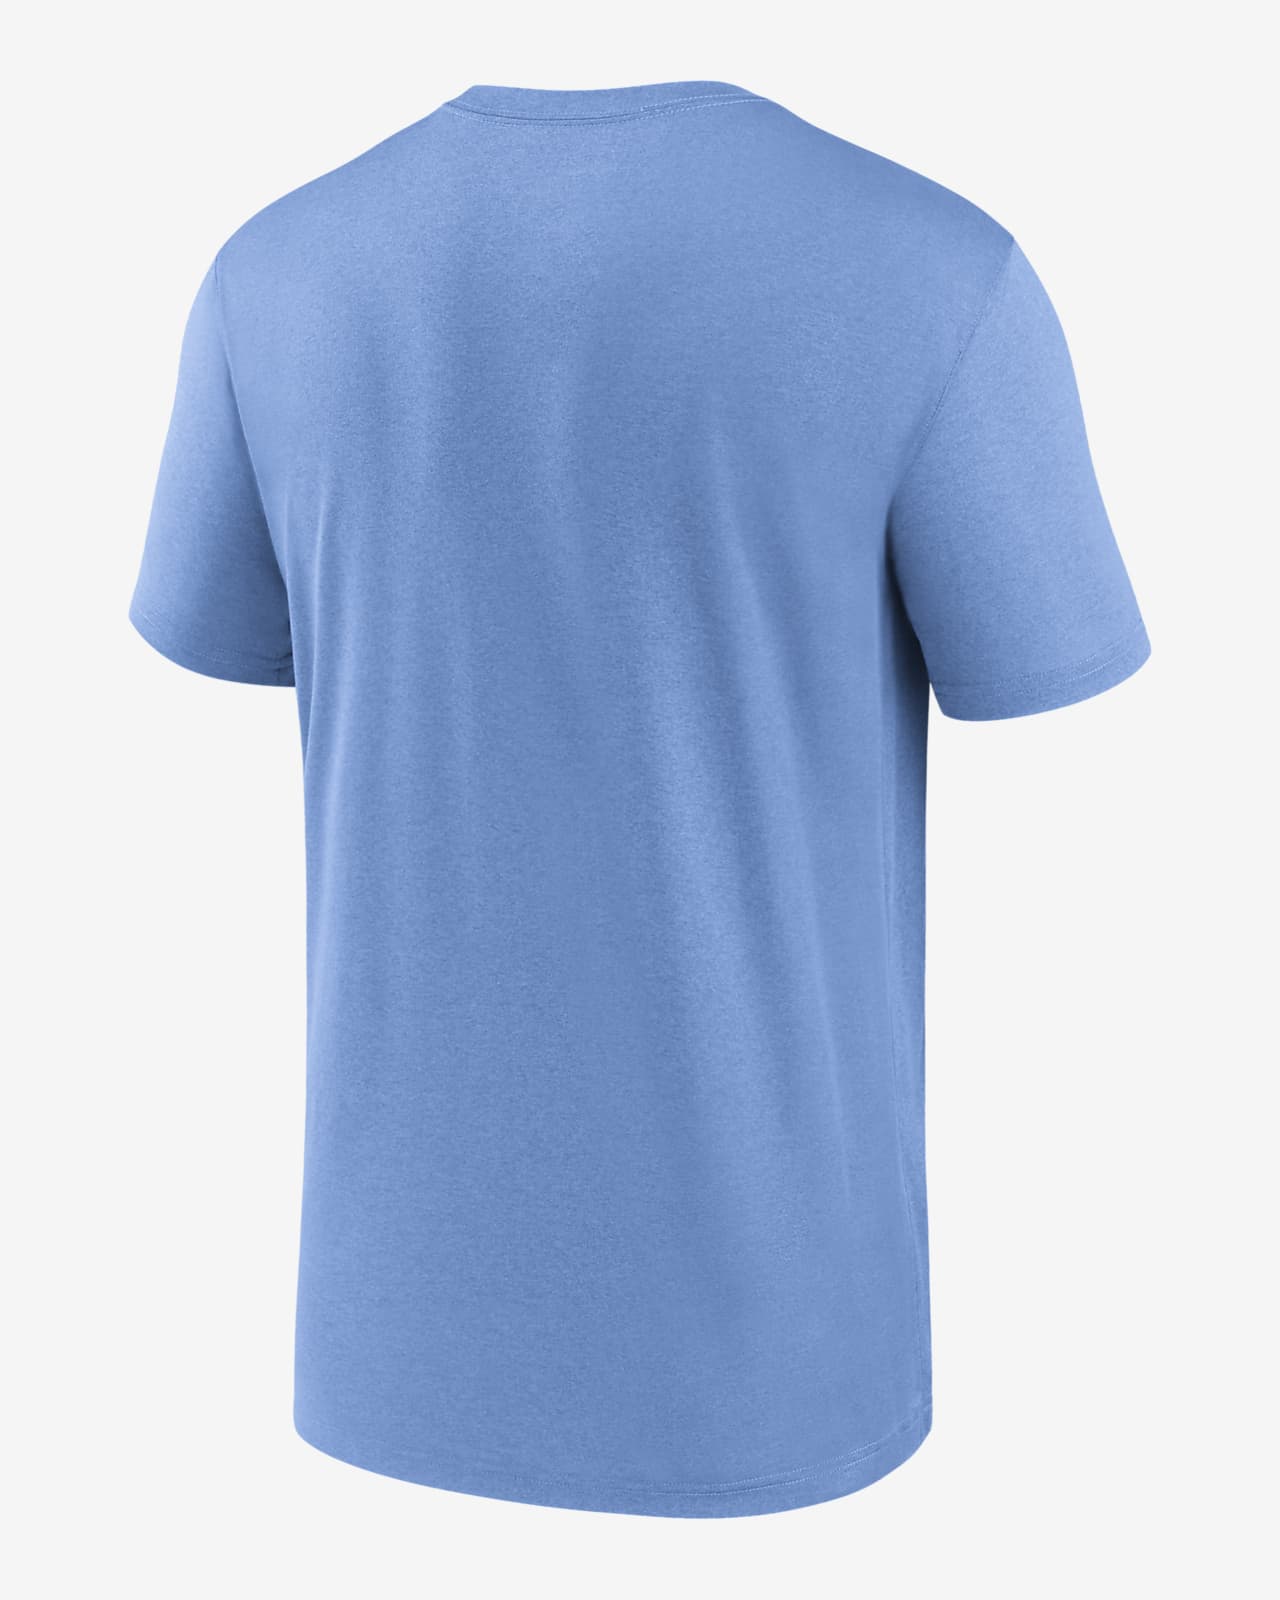 Nike, Shirts, Nike Tampa Bay Rays Dri Fit Shirt